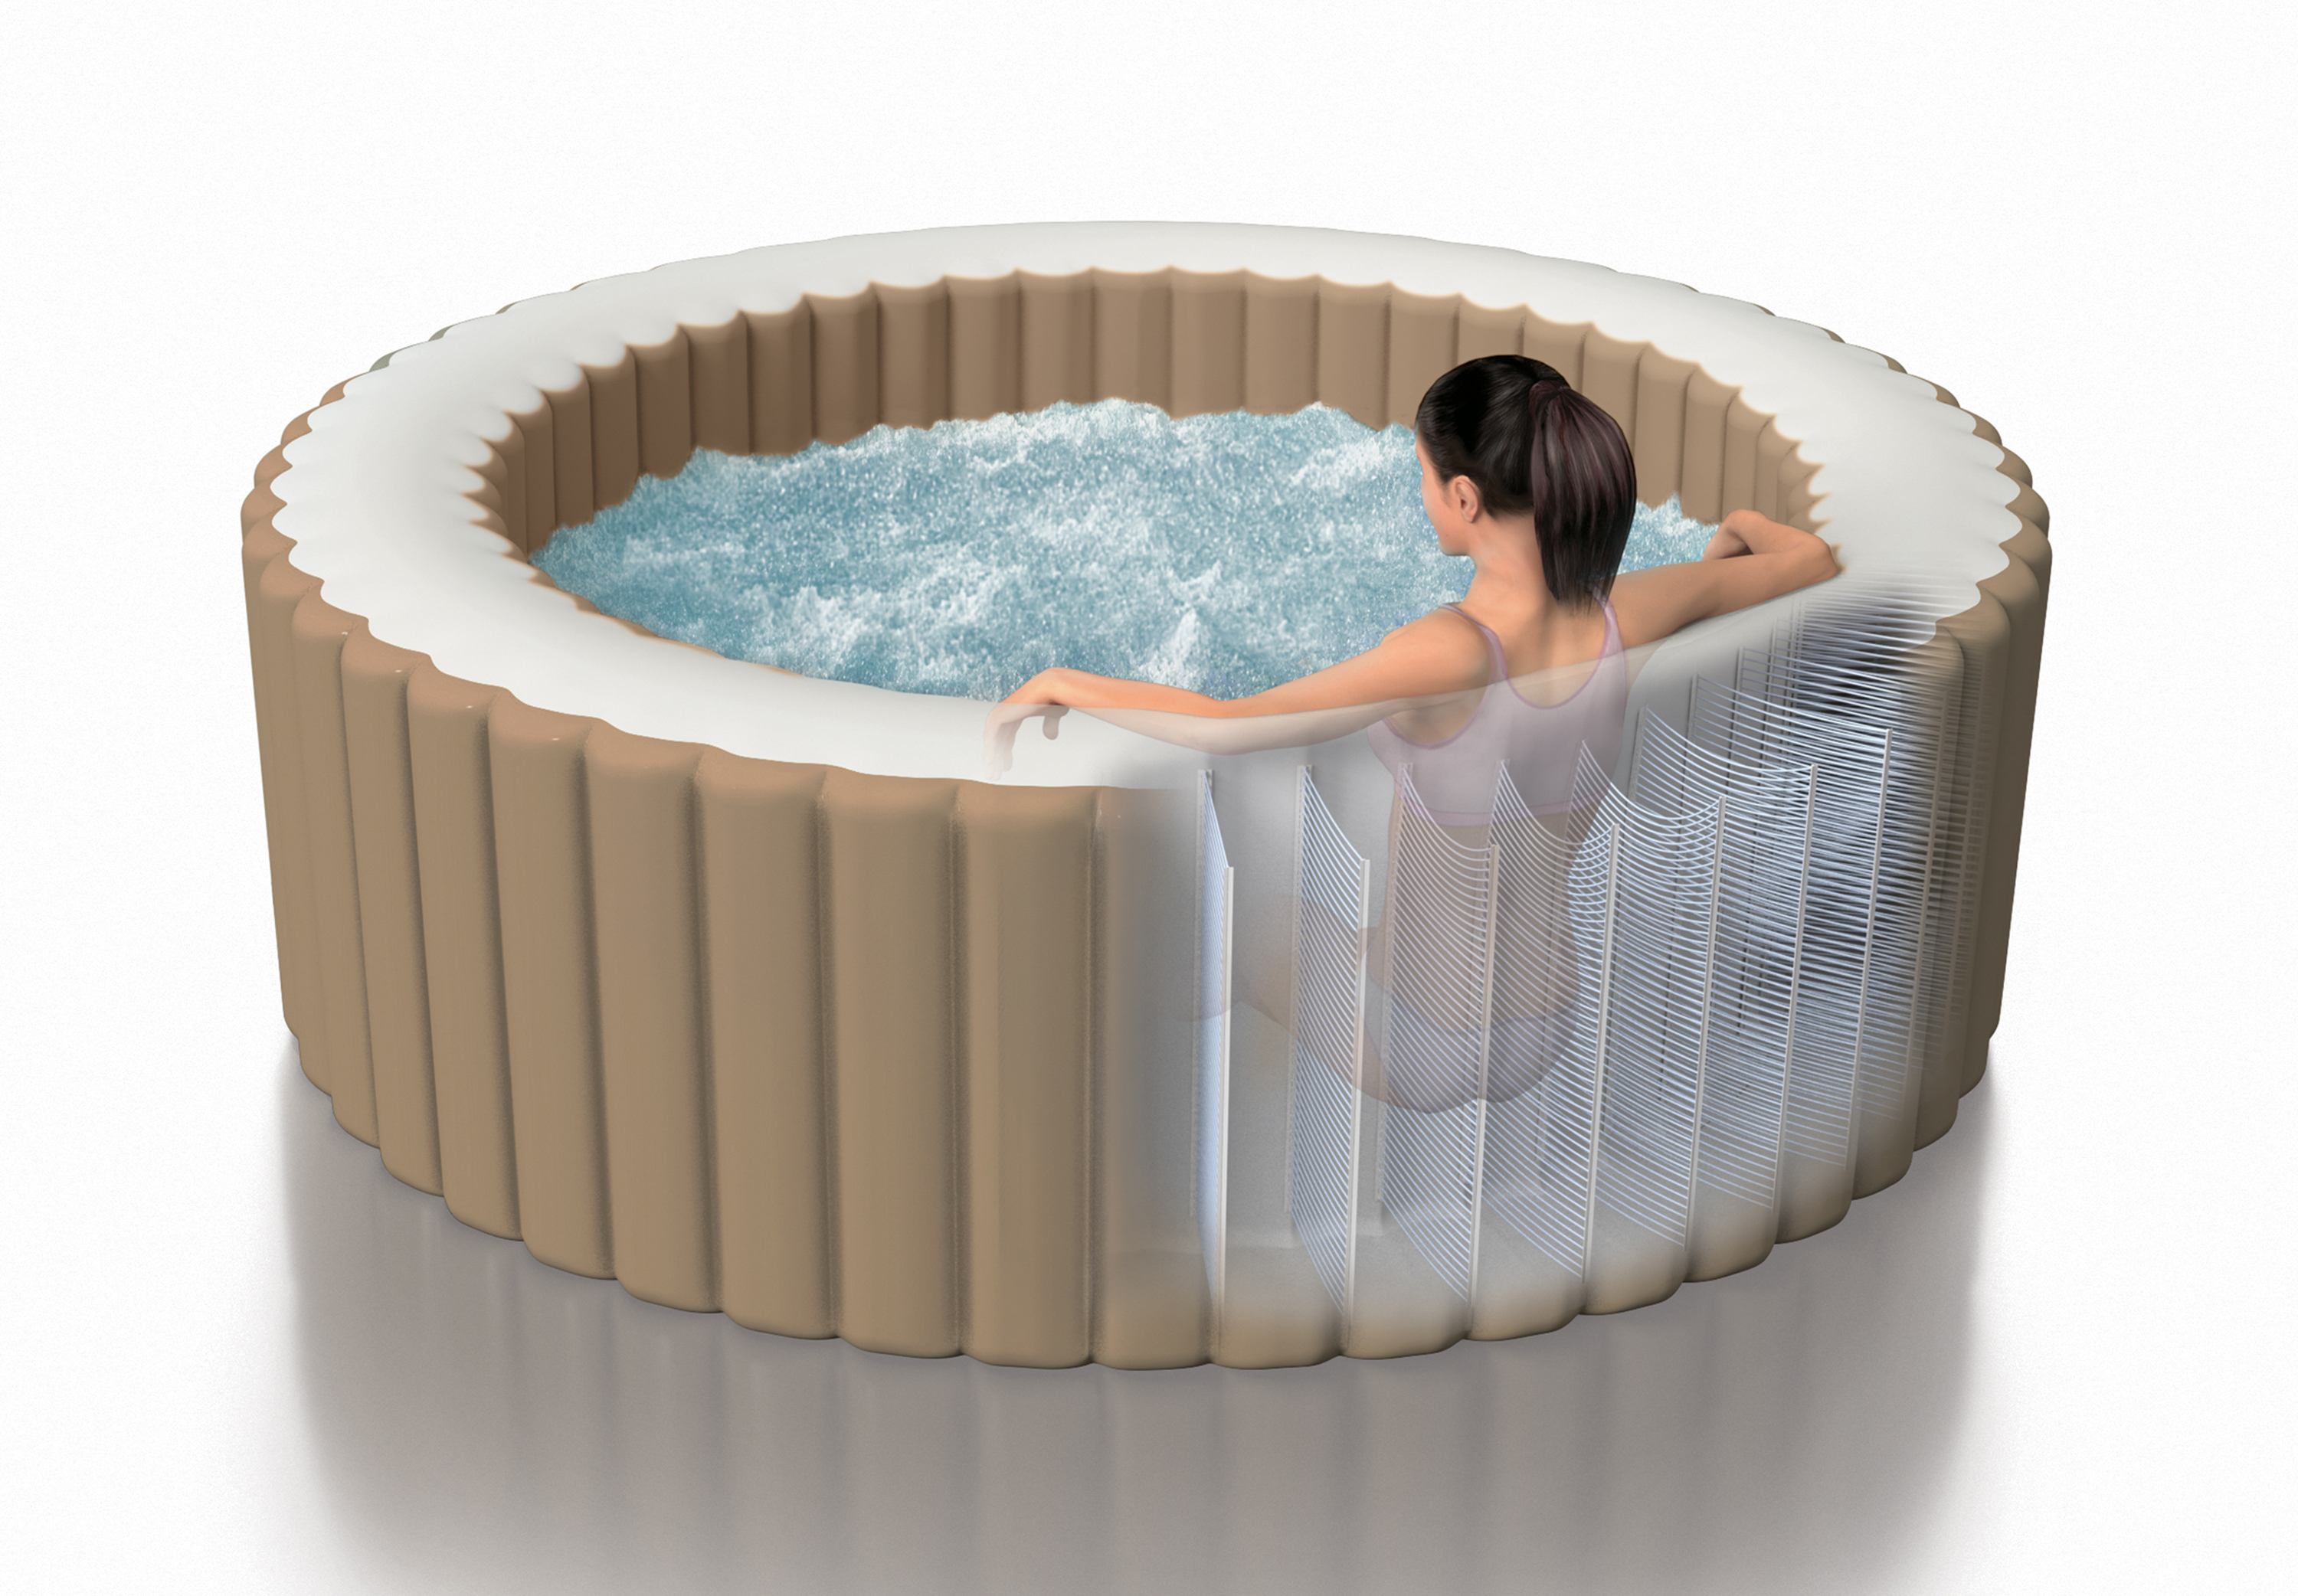 Intex 4-Person PureSpa Bubble Massage Inflatable Hot Tub Spa - image 2 of 10